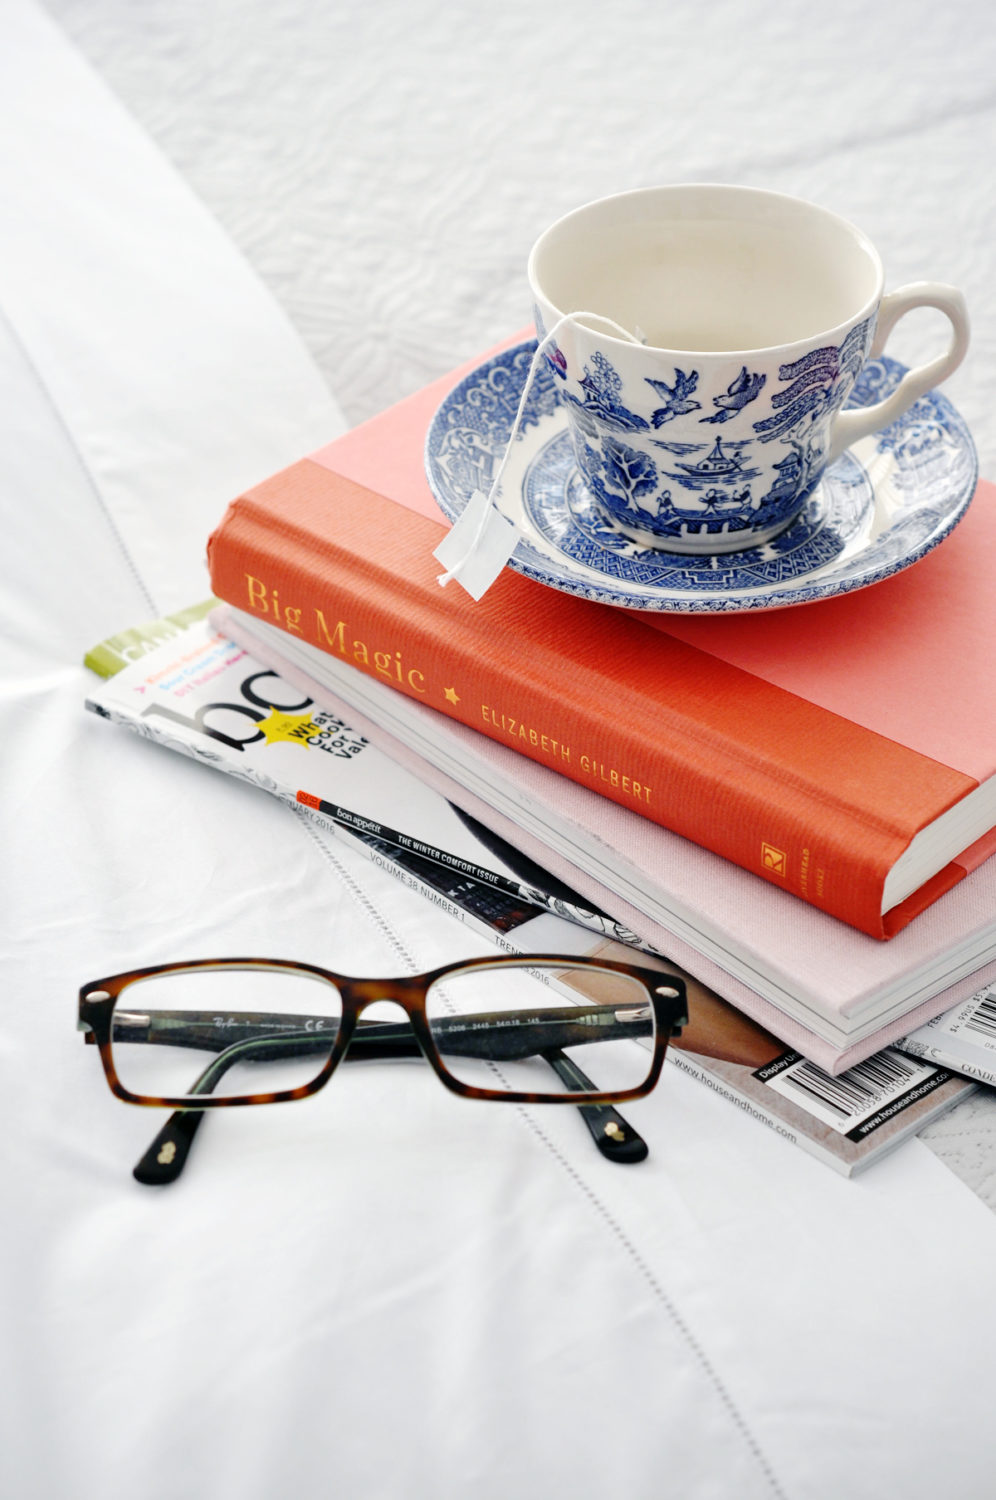 Tea, books, glasses.